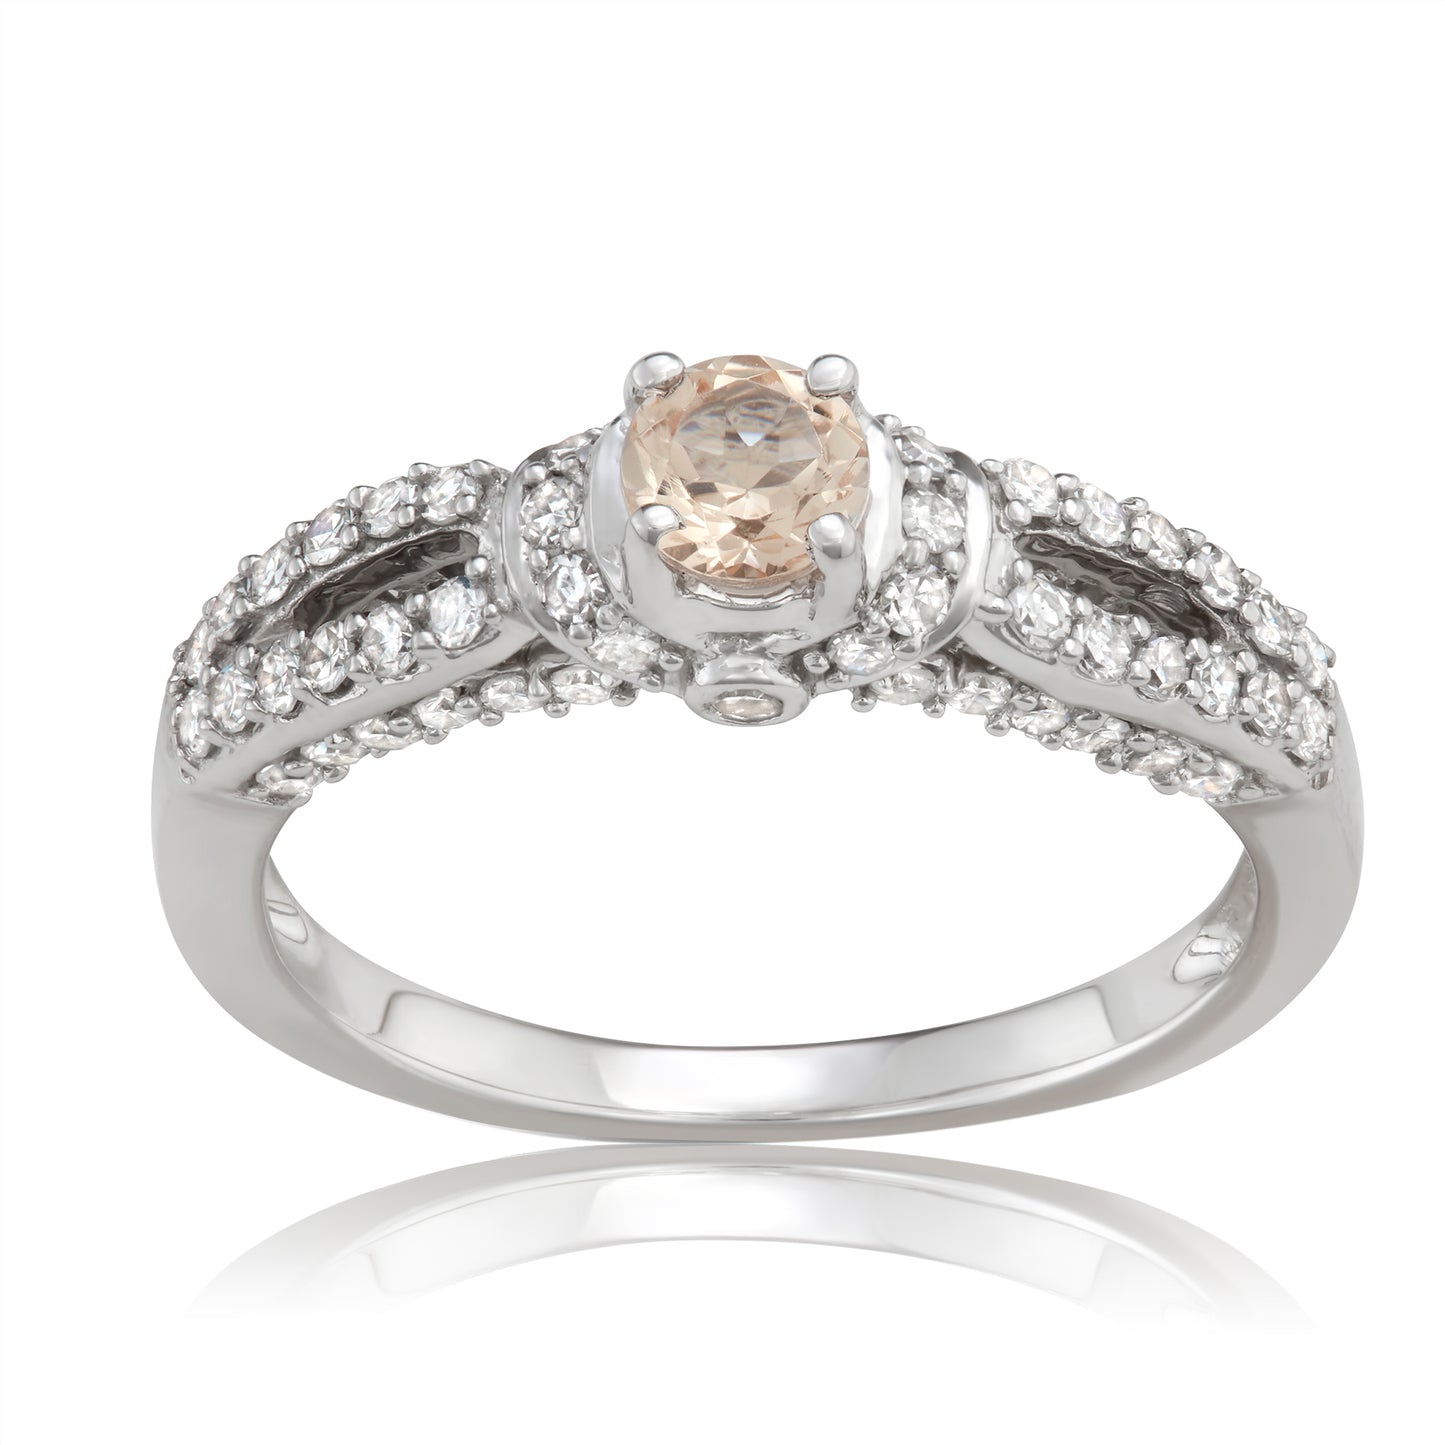 14K White Gold 1.00ct TW Morganite and White Diamond Engagement Ring